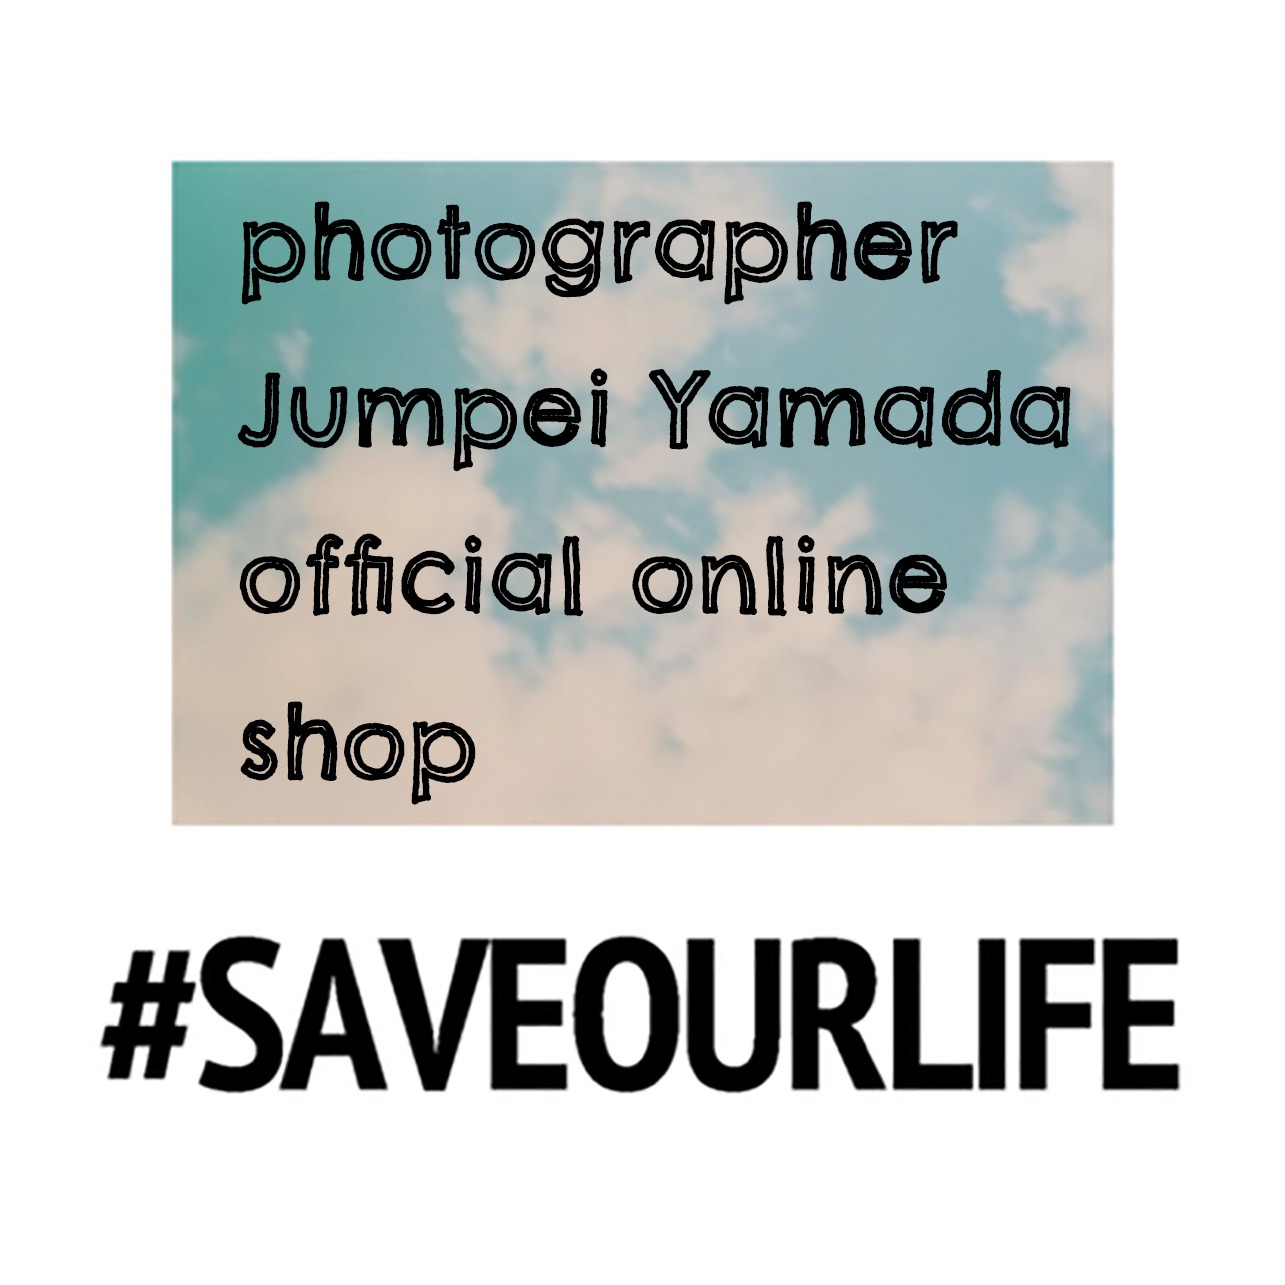 Jumpei Yamada official online shop